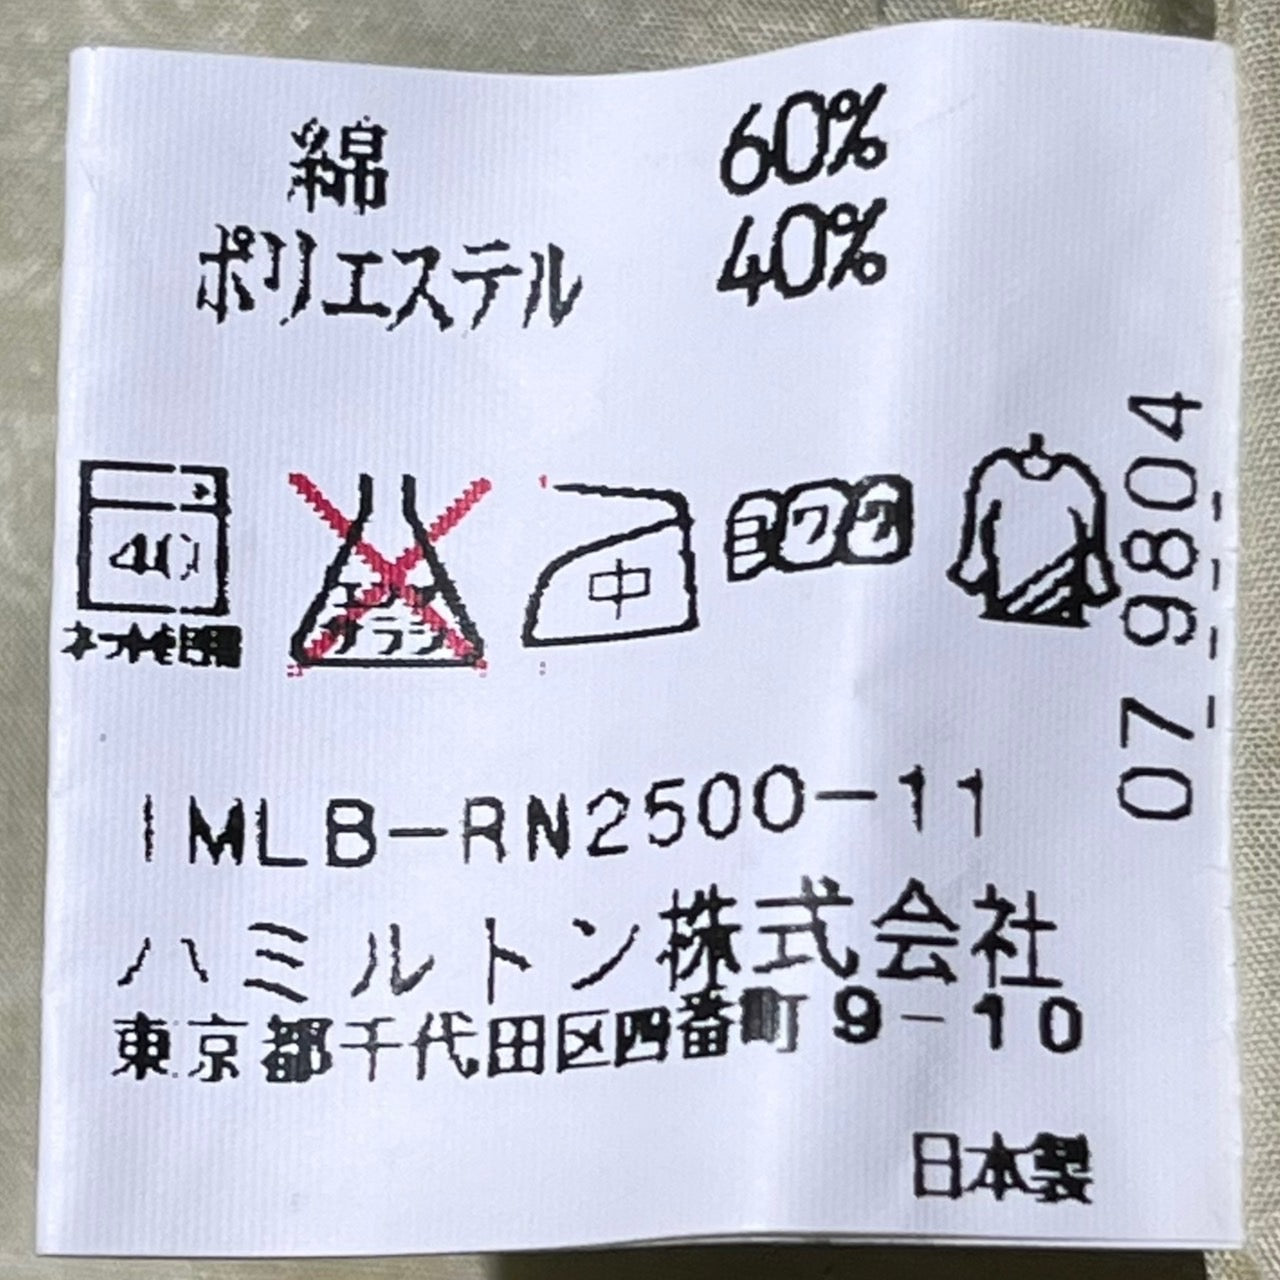 ISSEY MIYAKE(イッセイミヤケ) 90'sノースリーブシャツ IMLB-RN2500-11 L ベージュ